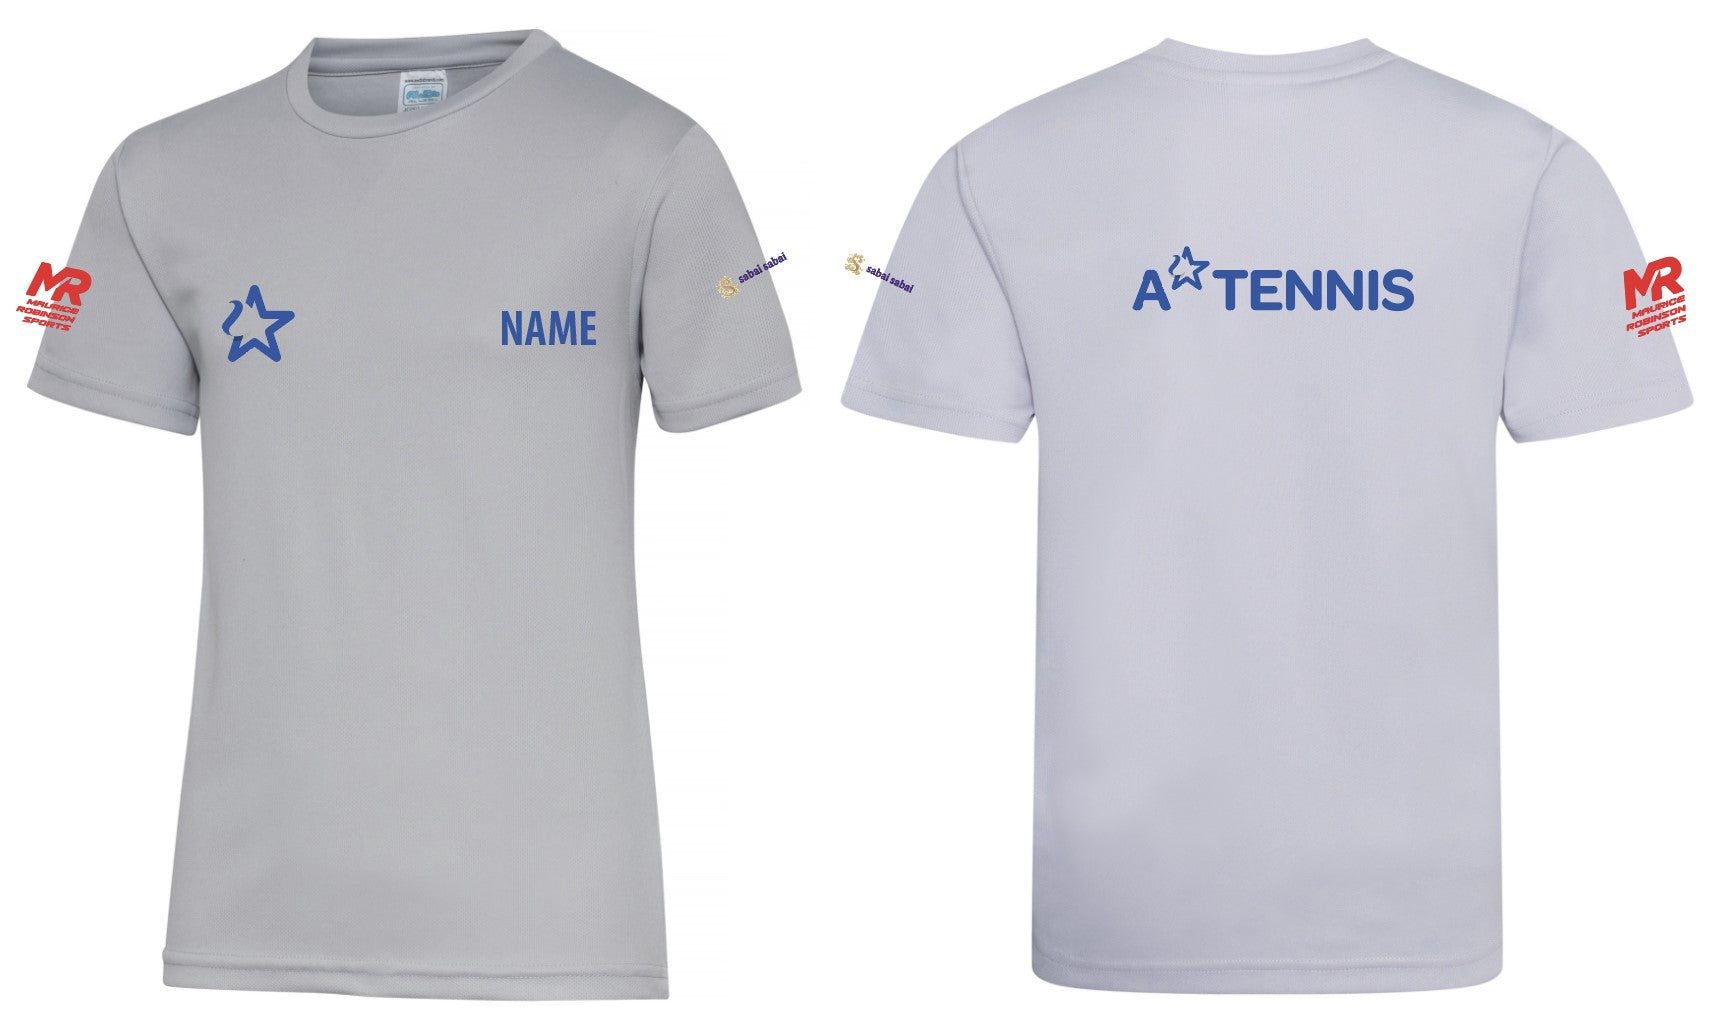 A Star Tennis Junior Training T-shirt